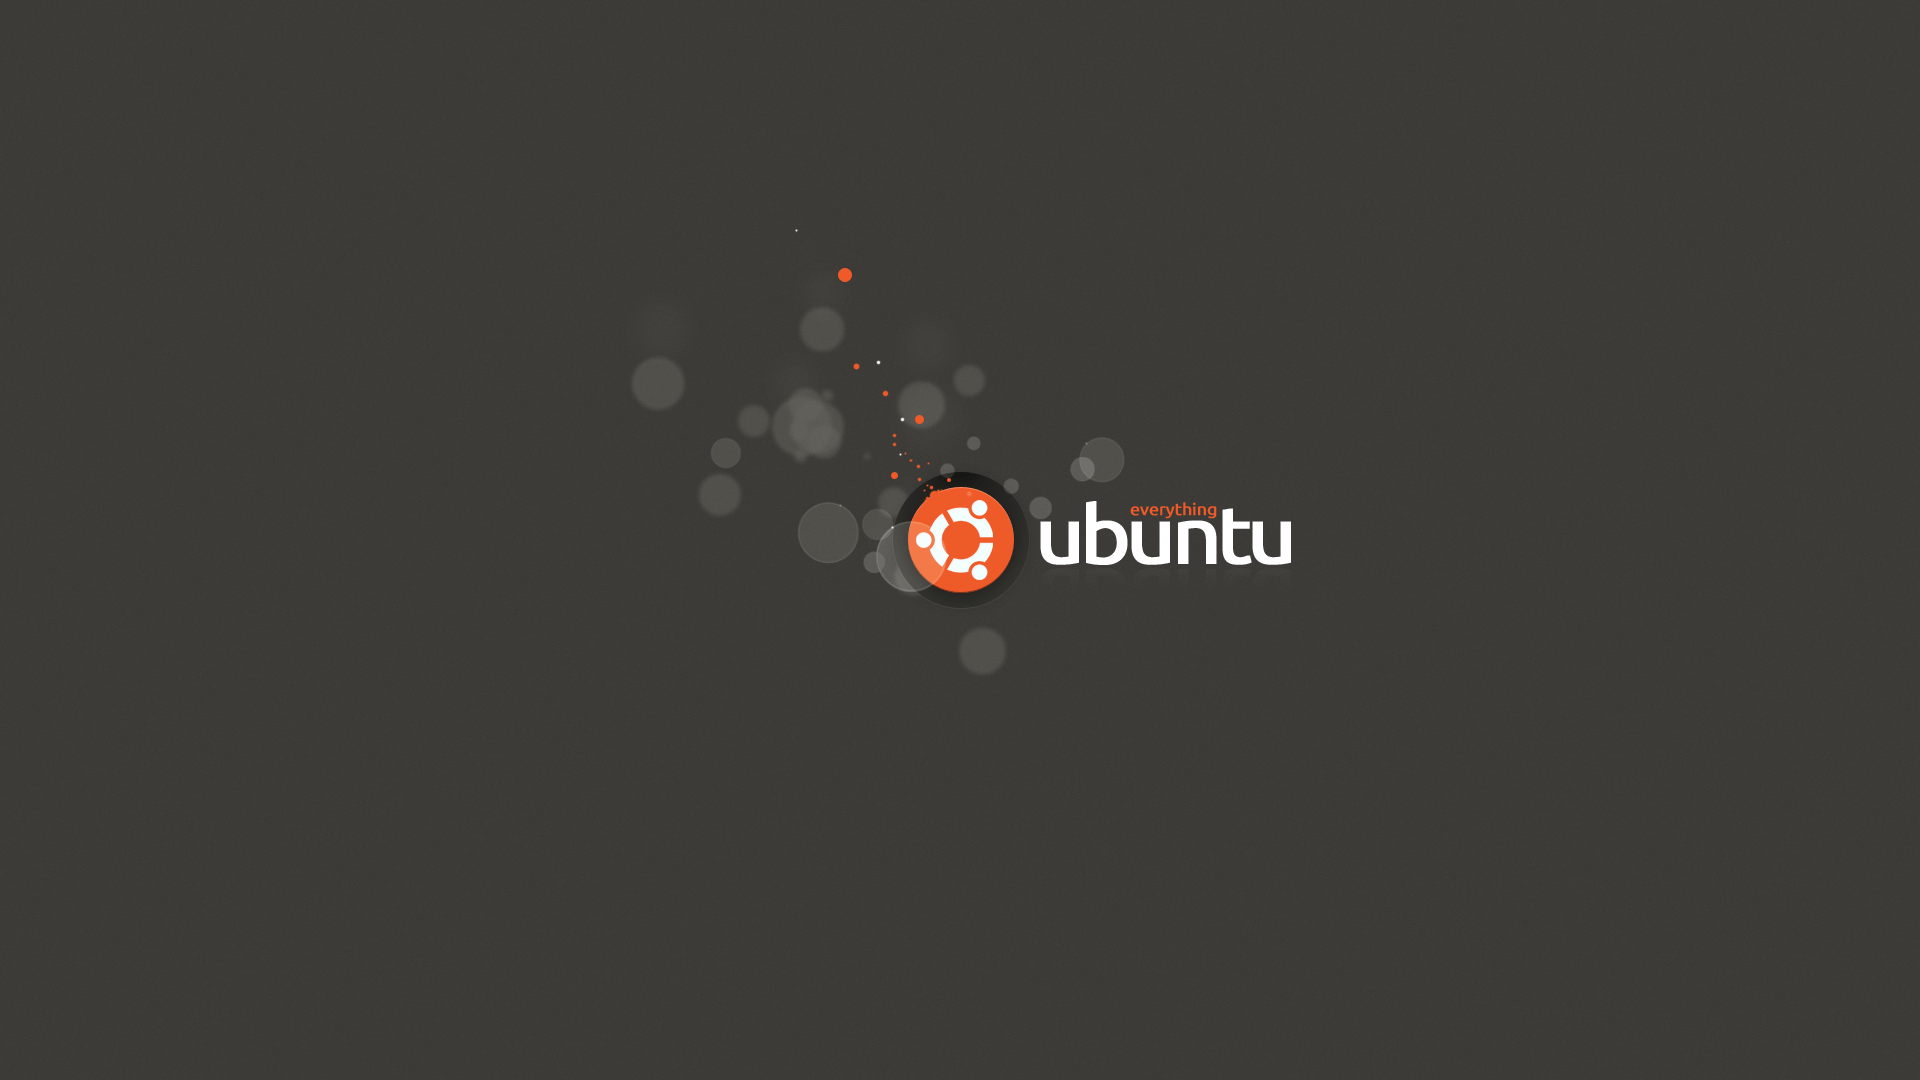 Dark Ubuntu Desktop Wallpaper 62902 1920x1080 px